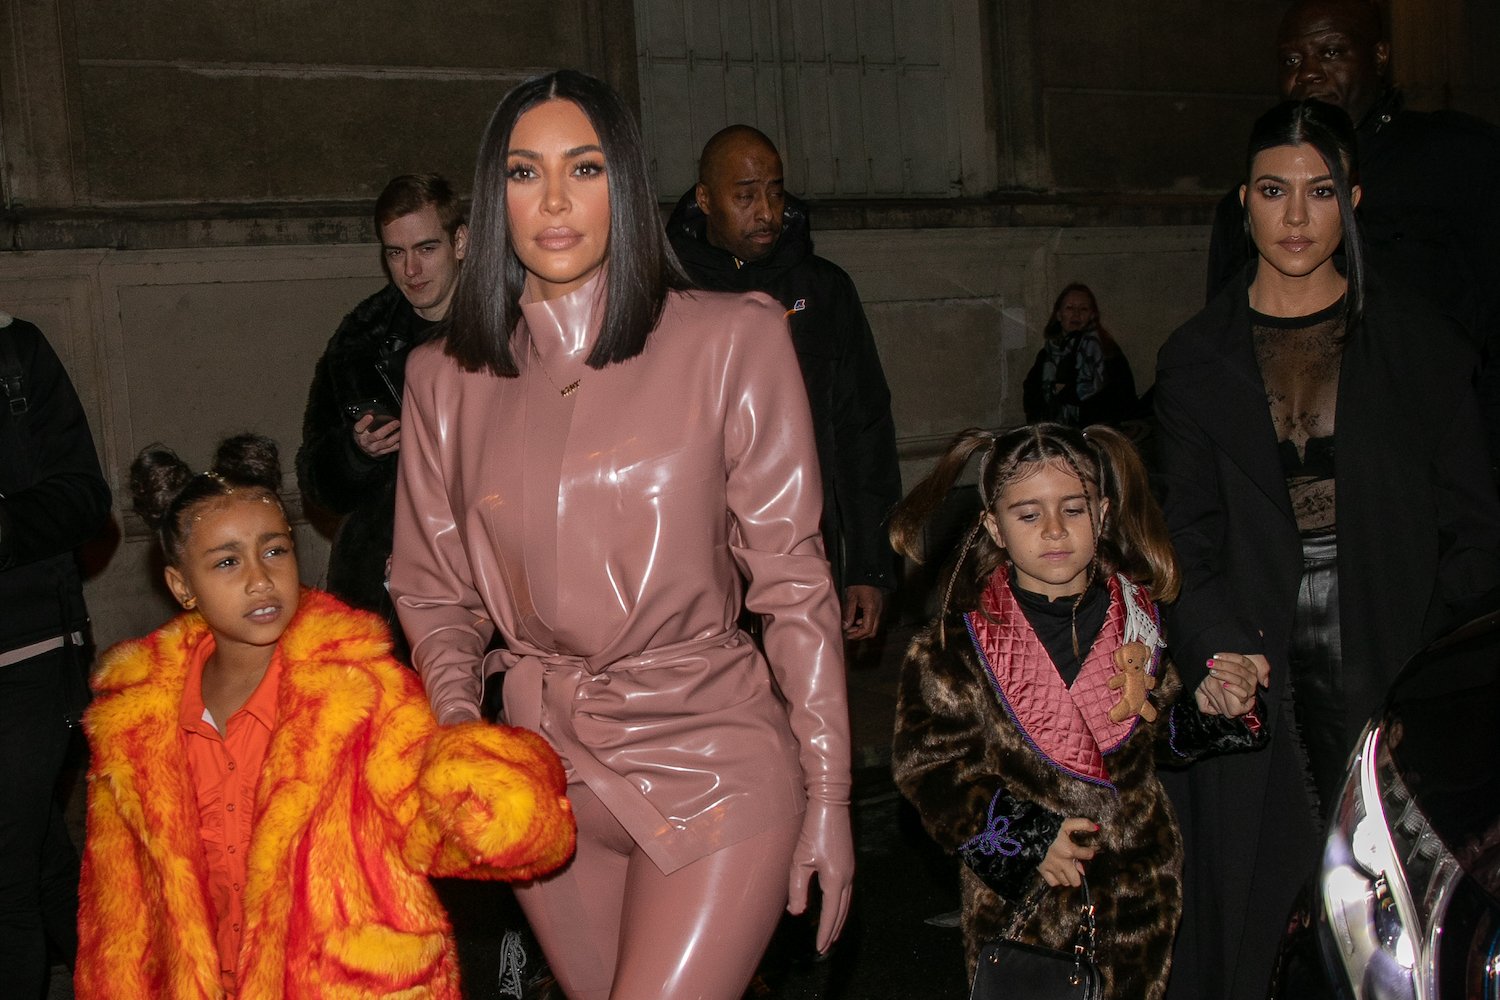 Kim Kardashian West, North West, Penelope Disick, and Kourtney Kardashian arrive at FERDI restaurant on March 01, 2020 in Paris, France